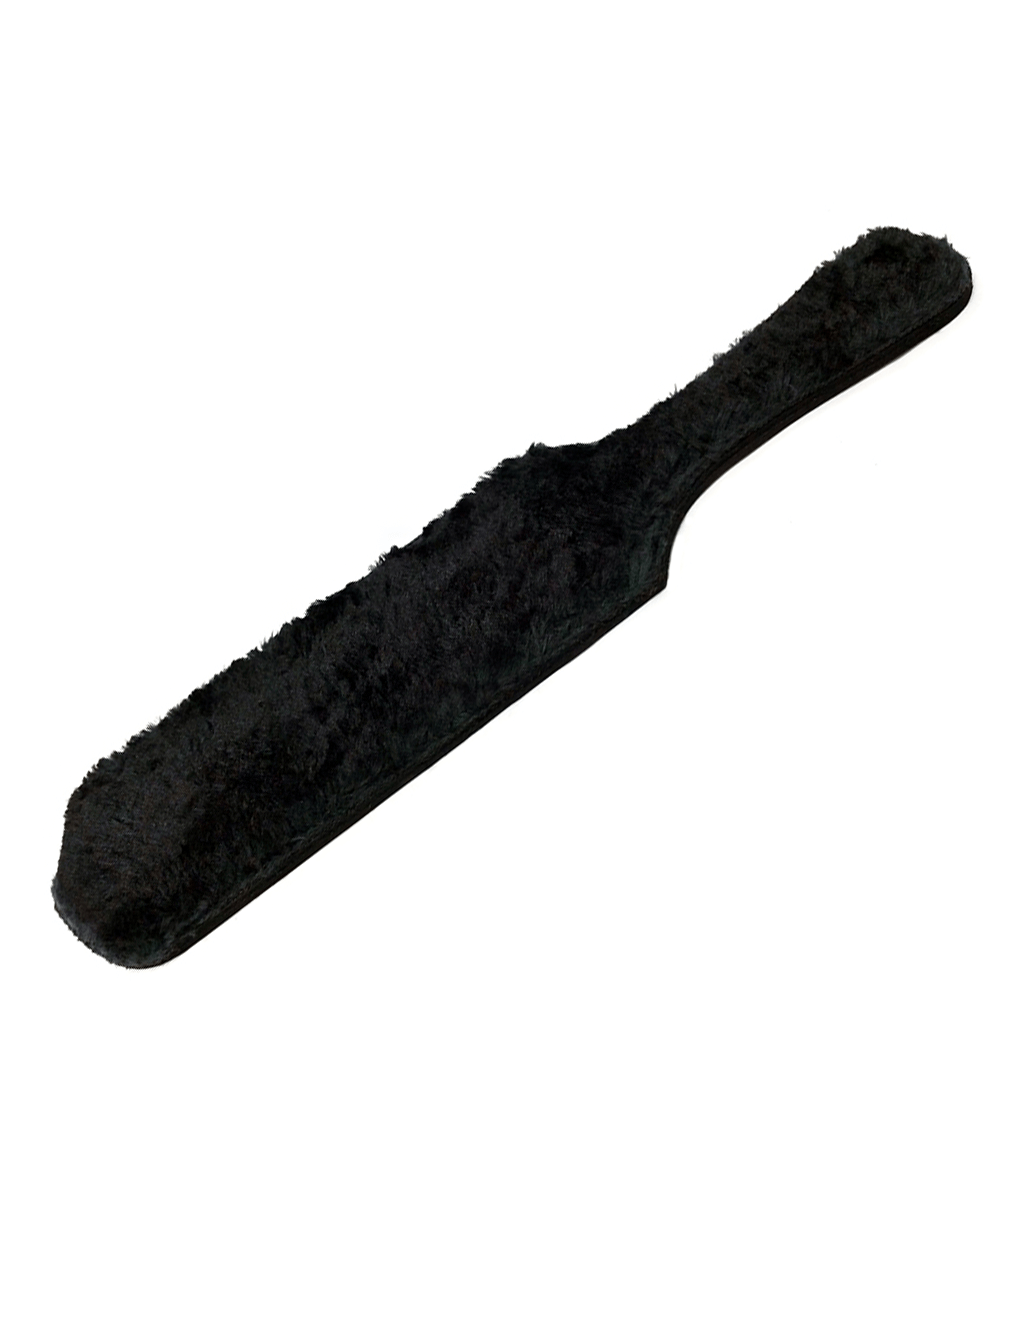 Rouge Leather & Fur Paddle - Black/Black - Main